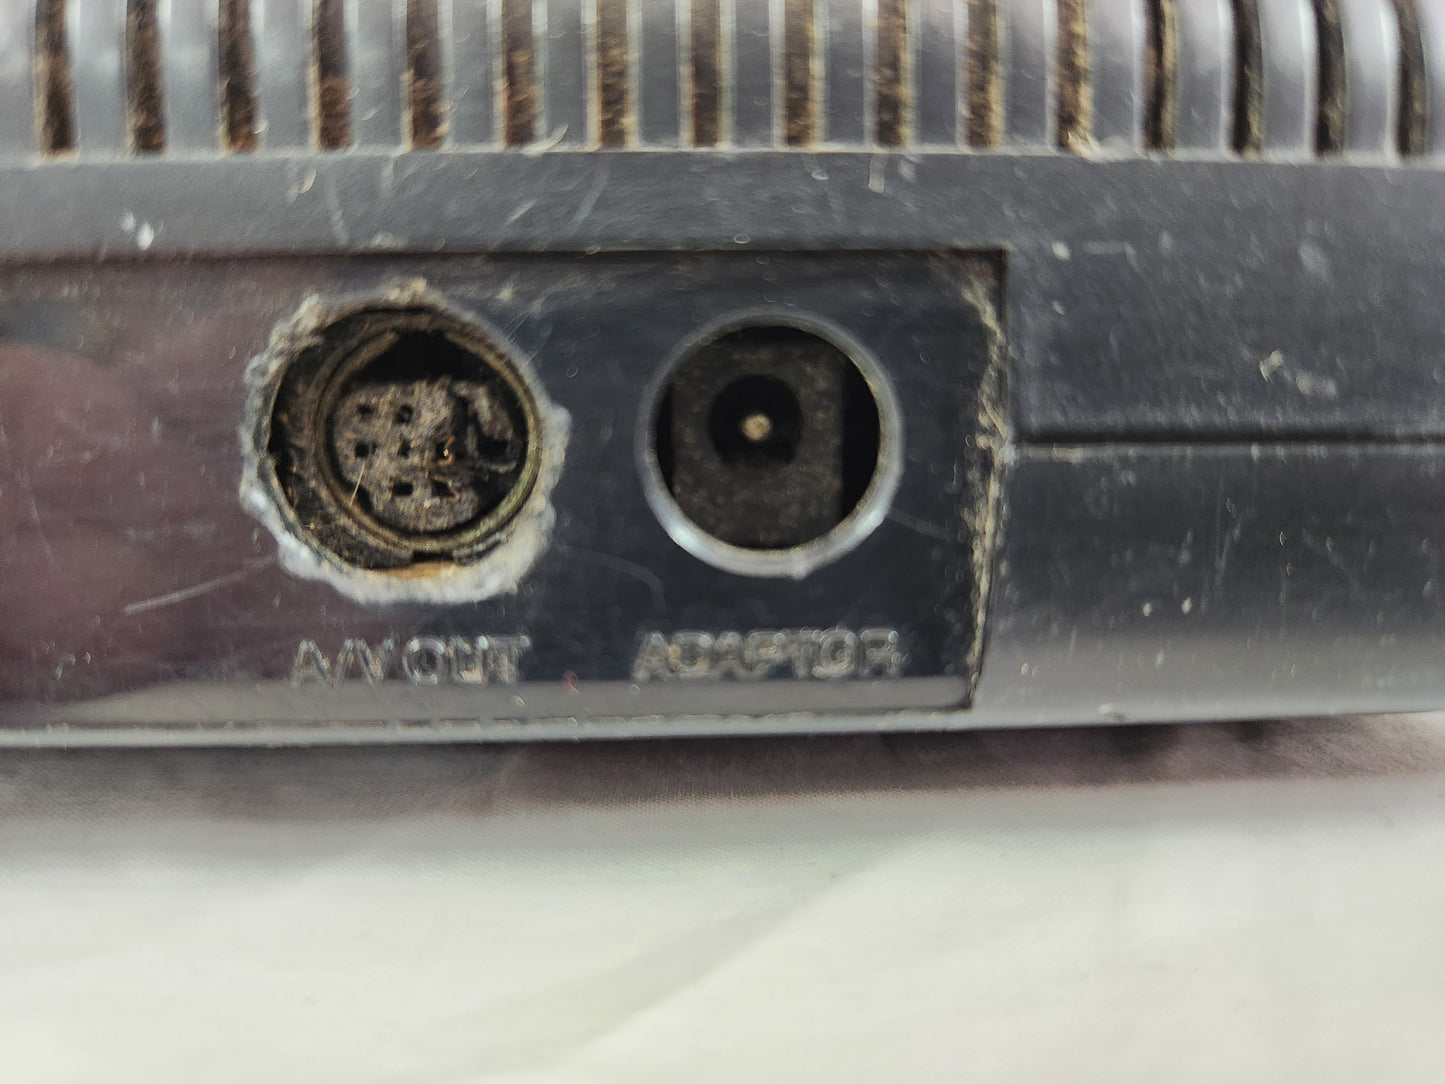 Sega Genesis Model MK-1631 Console (PARTS ONLY) no cords